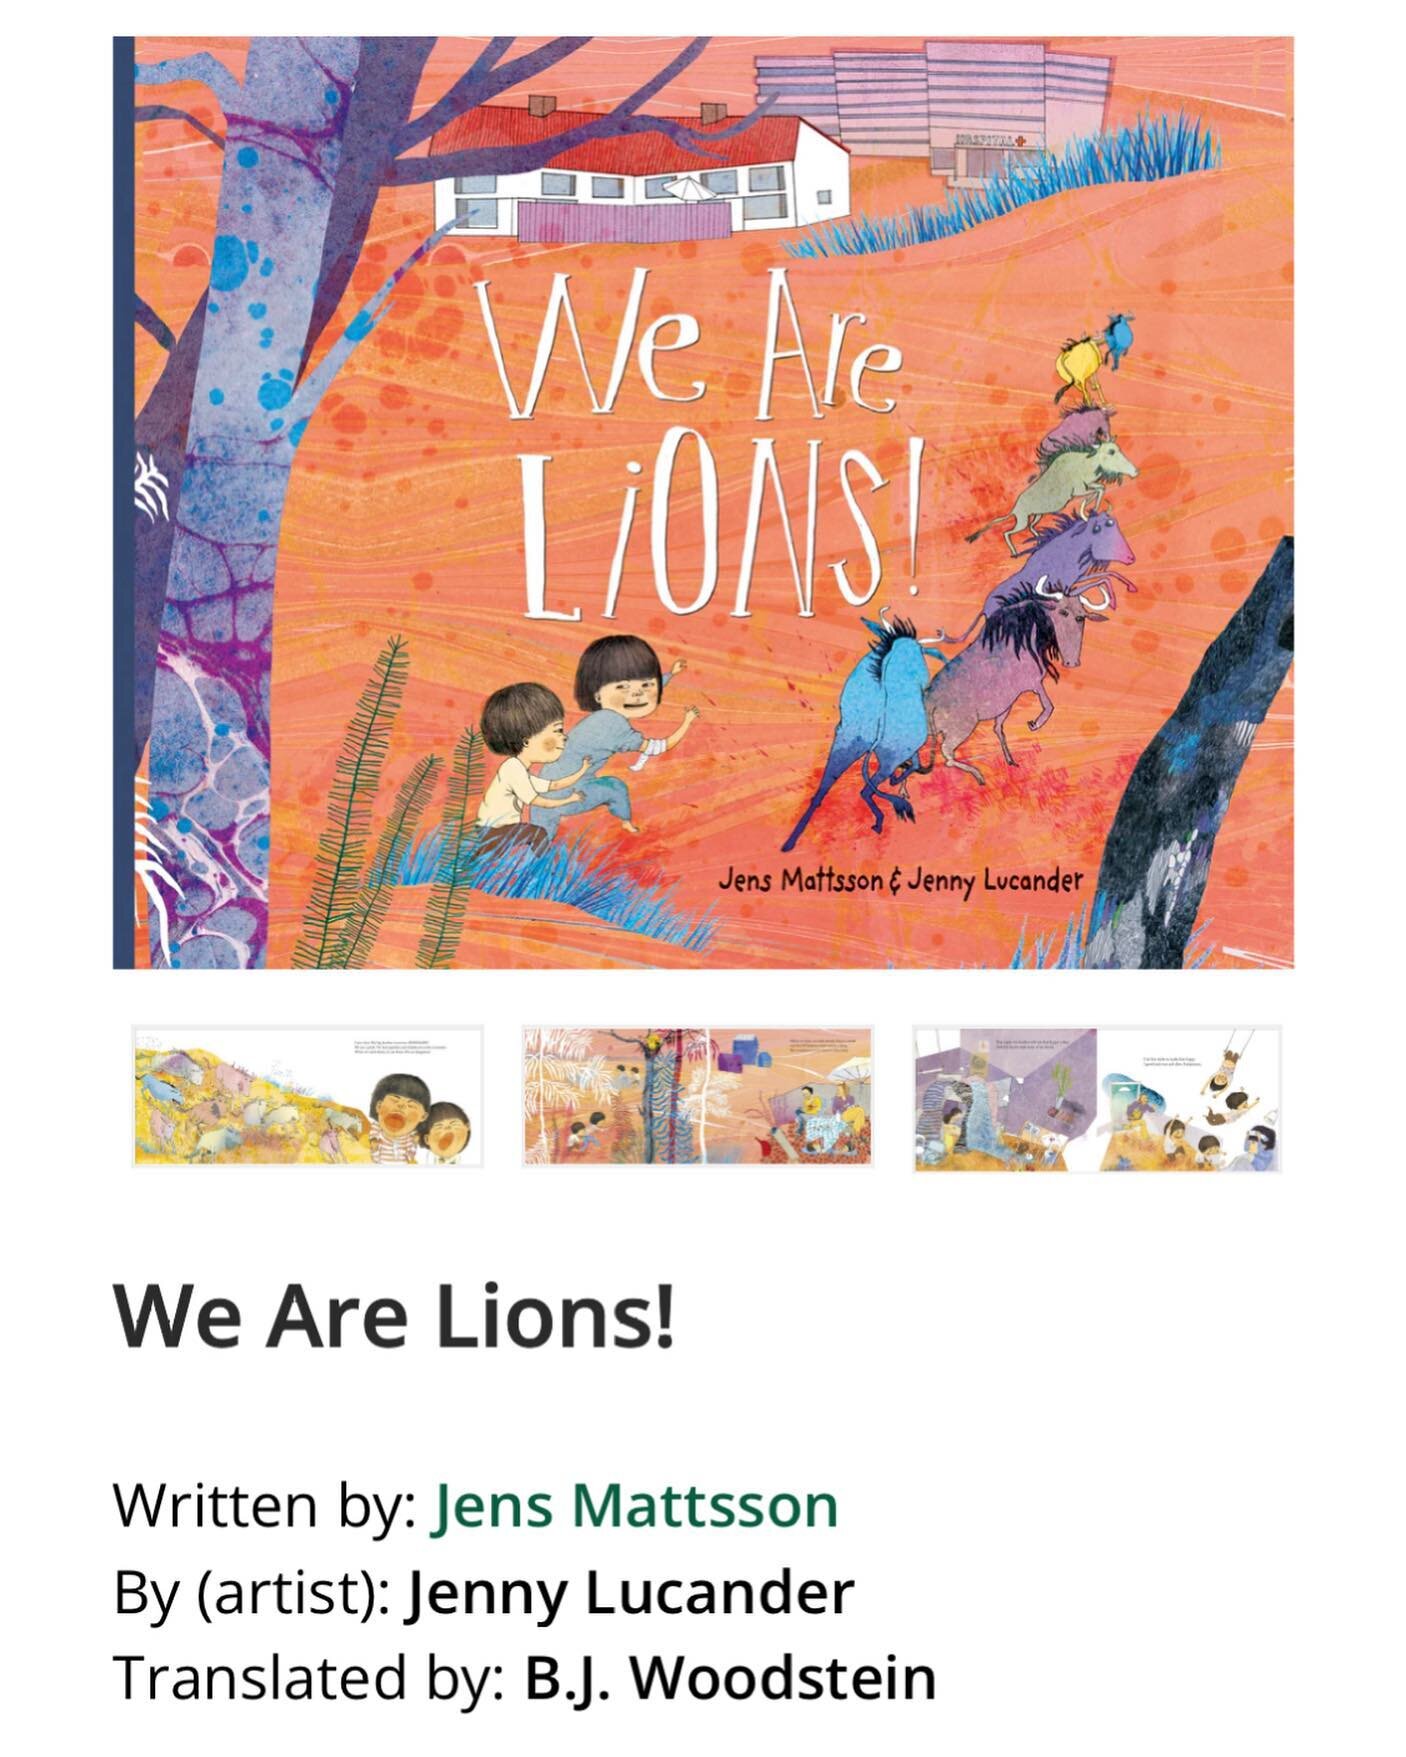 Roooaar! Wohoo! We are lions now in English at @groundwoodbooks. Translated by @bjwoodstein ❤️🦁🦁❤️ @koja @skrivarjens Thank you all for the amazing work! #jennylucander #vi&auml;rlajon #wearelions #illustration #picturebook